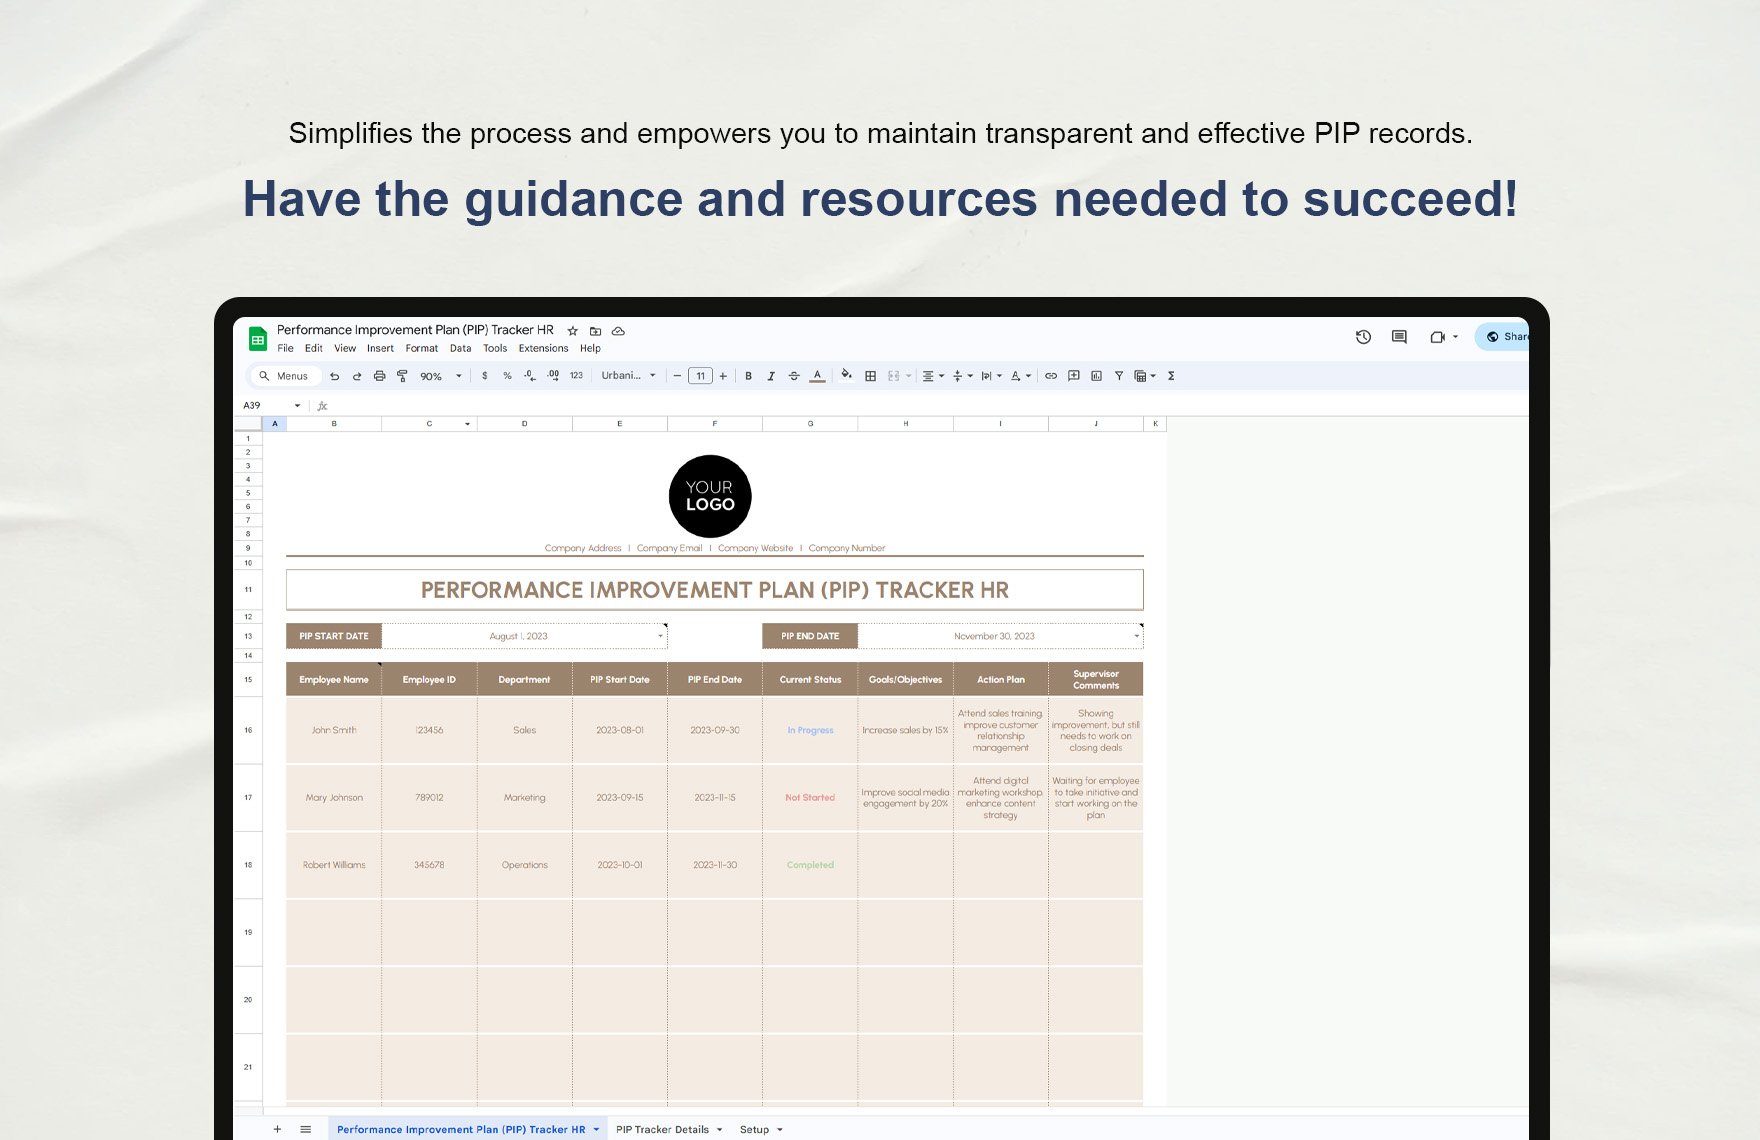 Performance Improvement Plan (PIP) Tracker HR Template